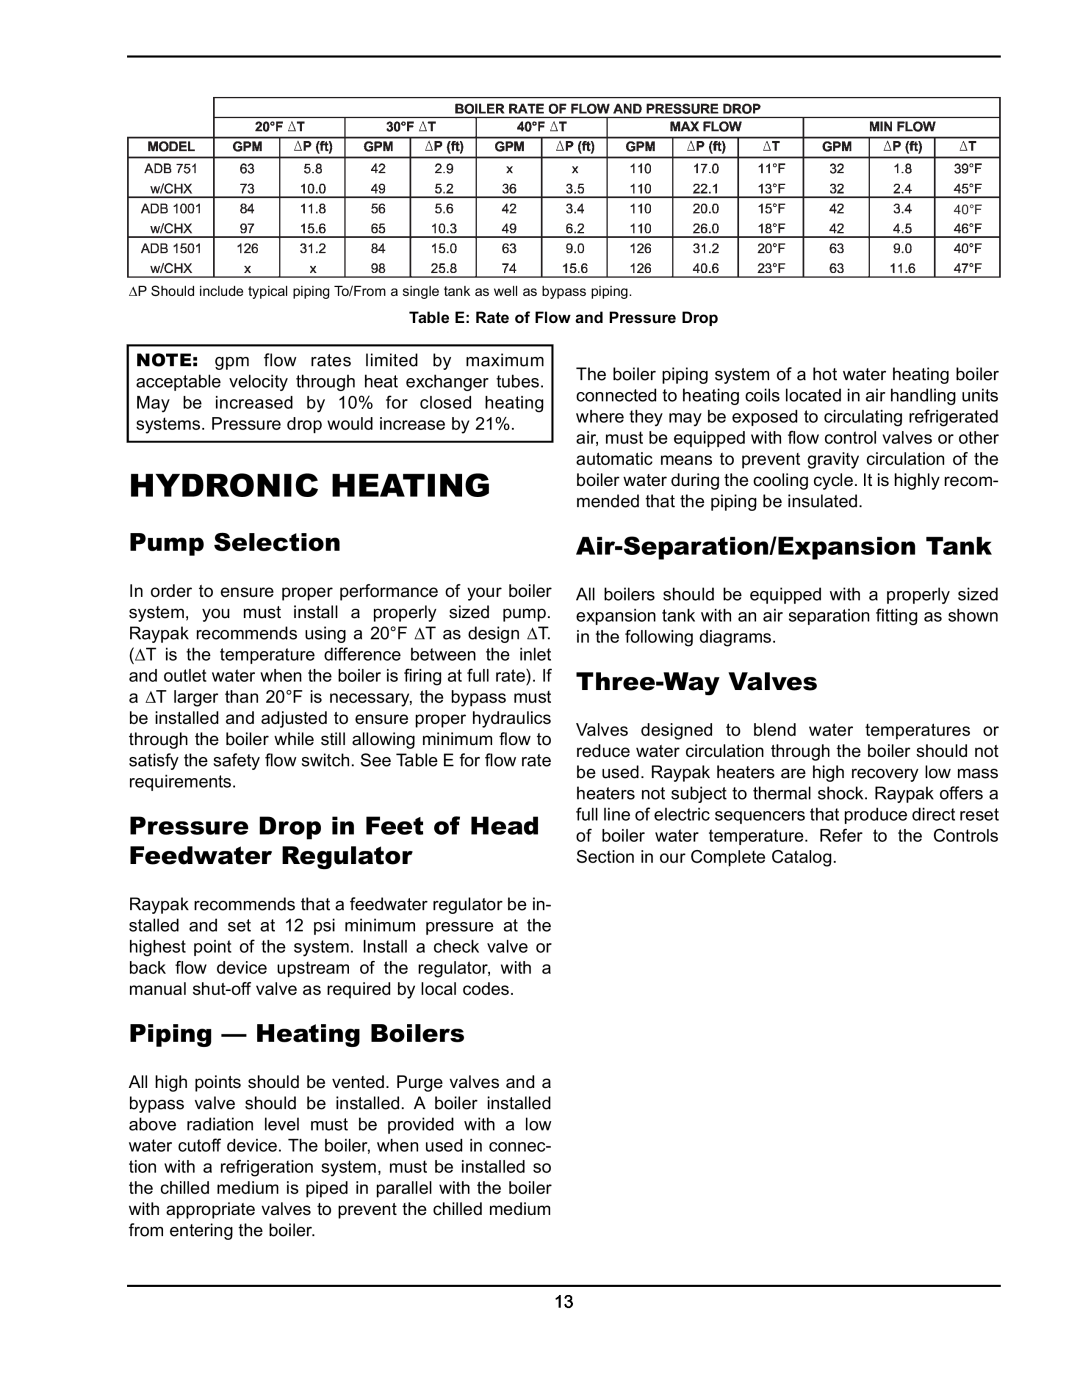 Raypak 751 Hydronic Heating, Pump Selection, Pressure Drop in Feet of Head Feedwater Regulator, Piping - Heating Boilers 